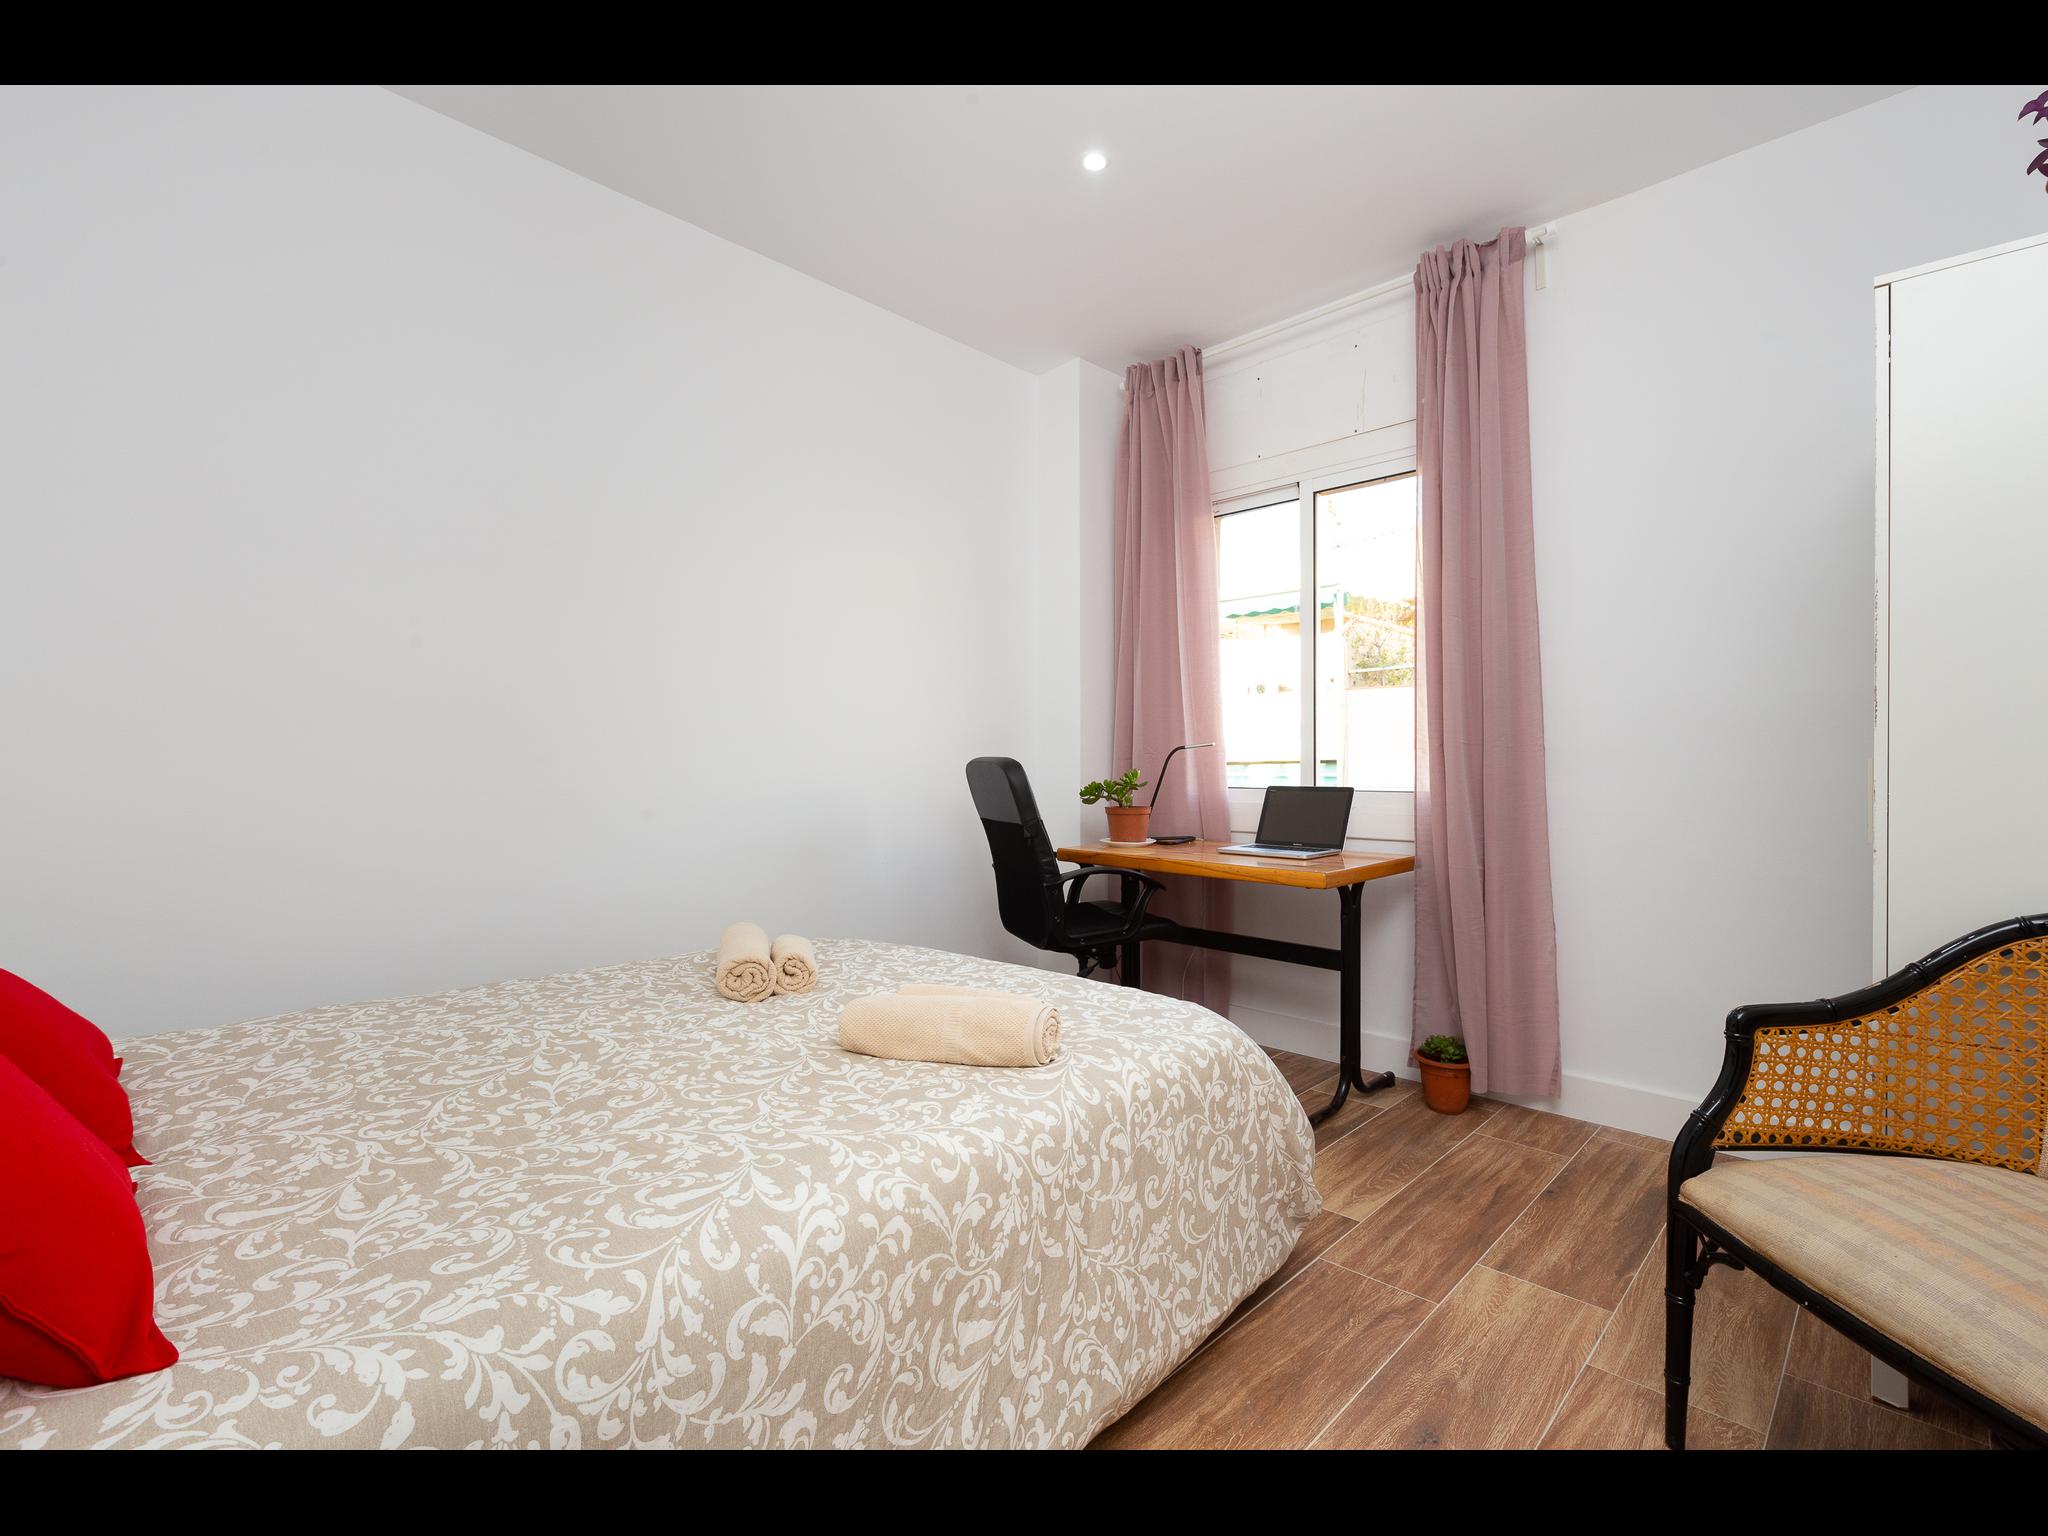 Piquer - One bedroom apartment Barcelona